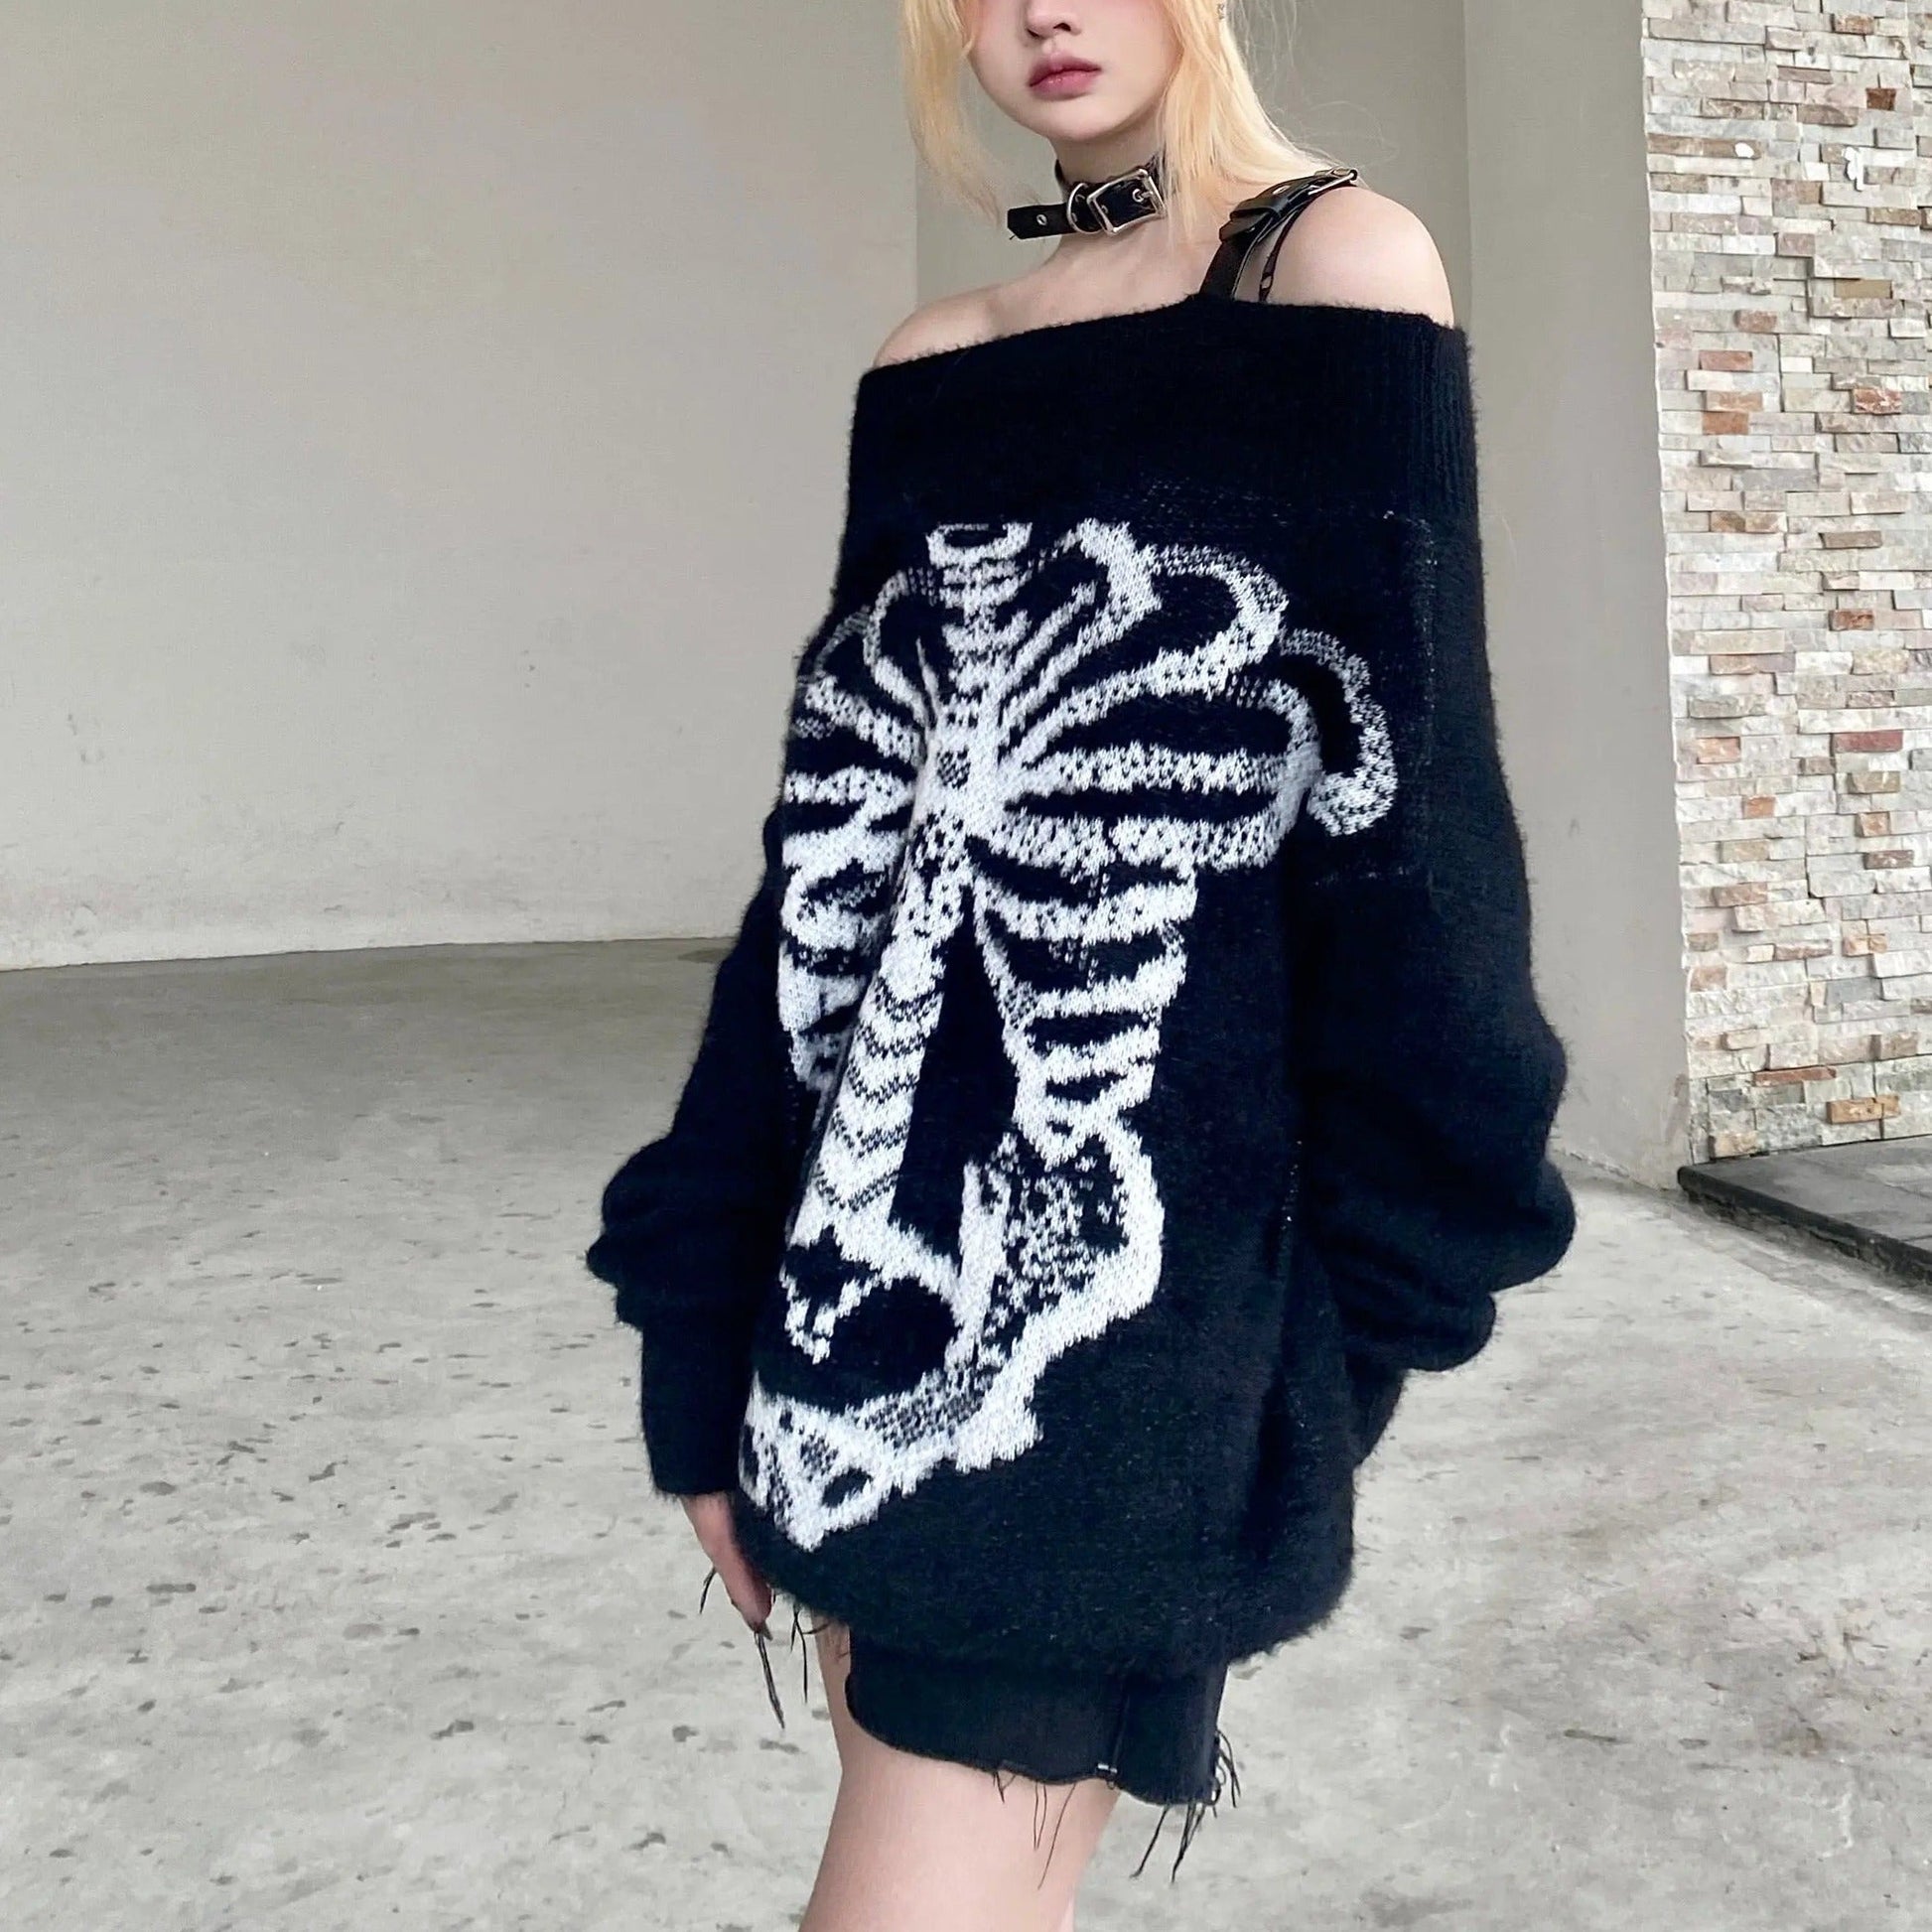 Flower Bone' Dark Pattern Shoulder Off Oversized Sweater